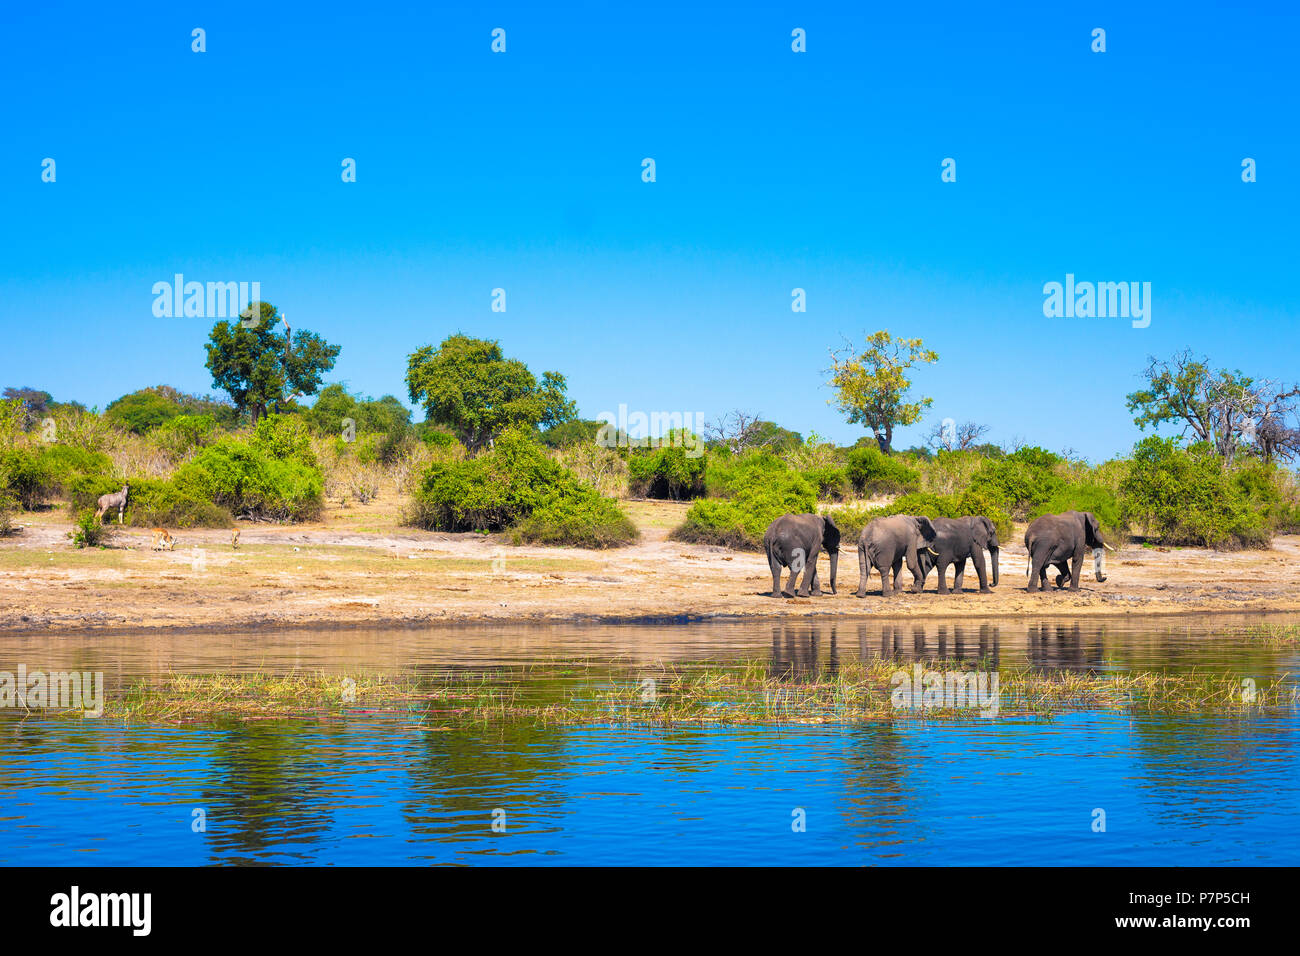 Group of elephants walking along a river Stock Photo